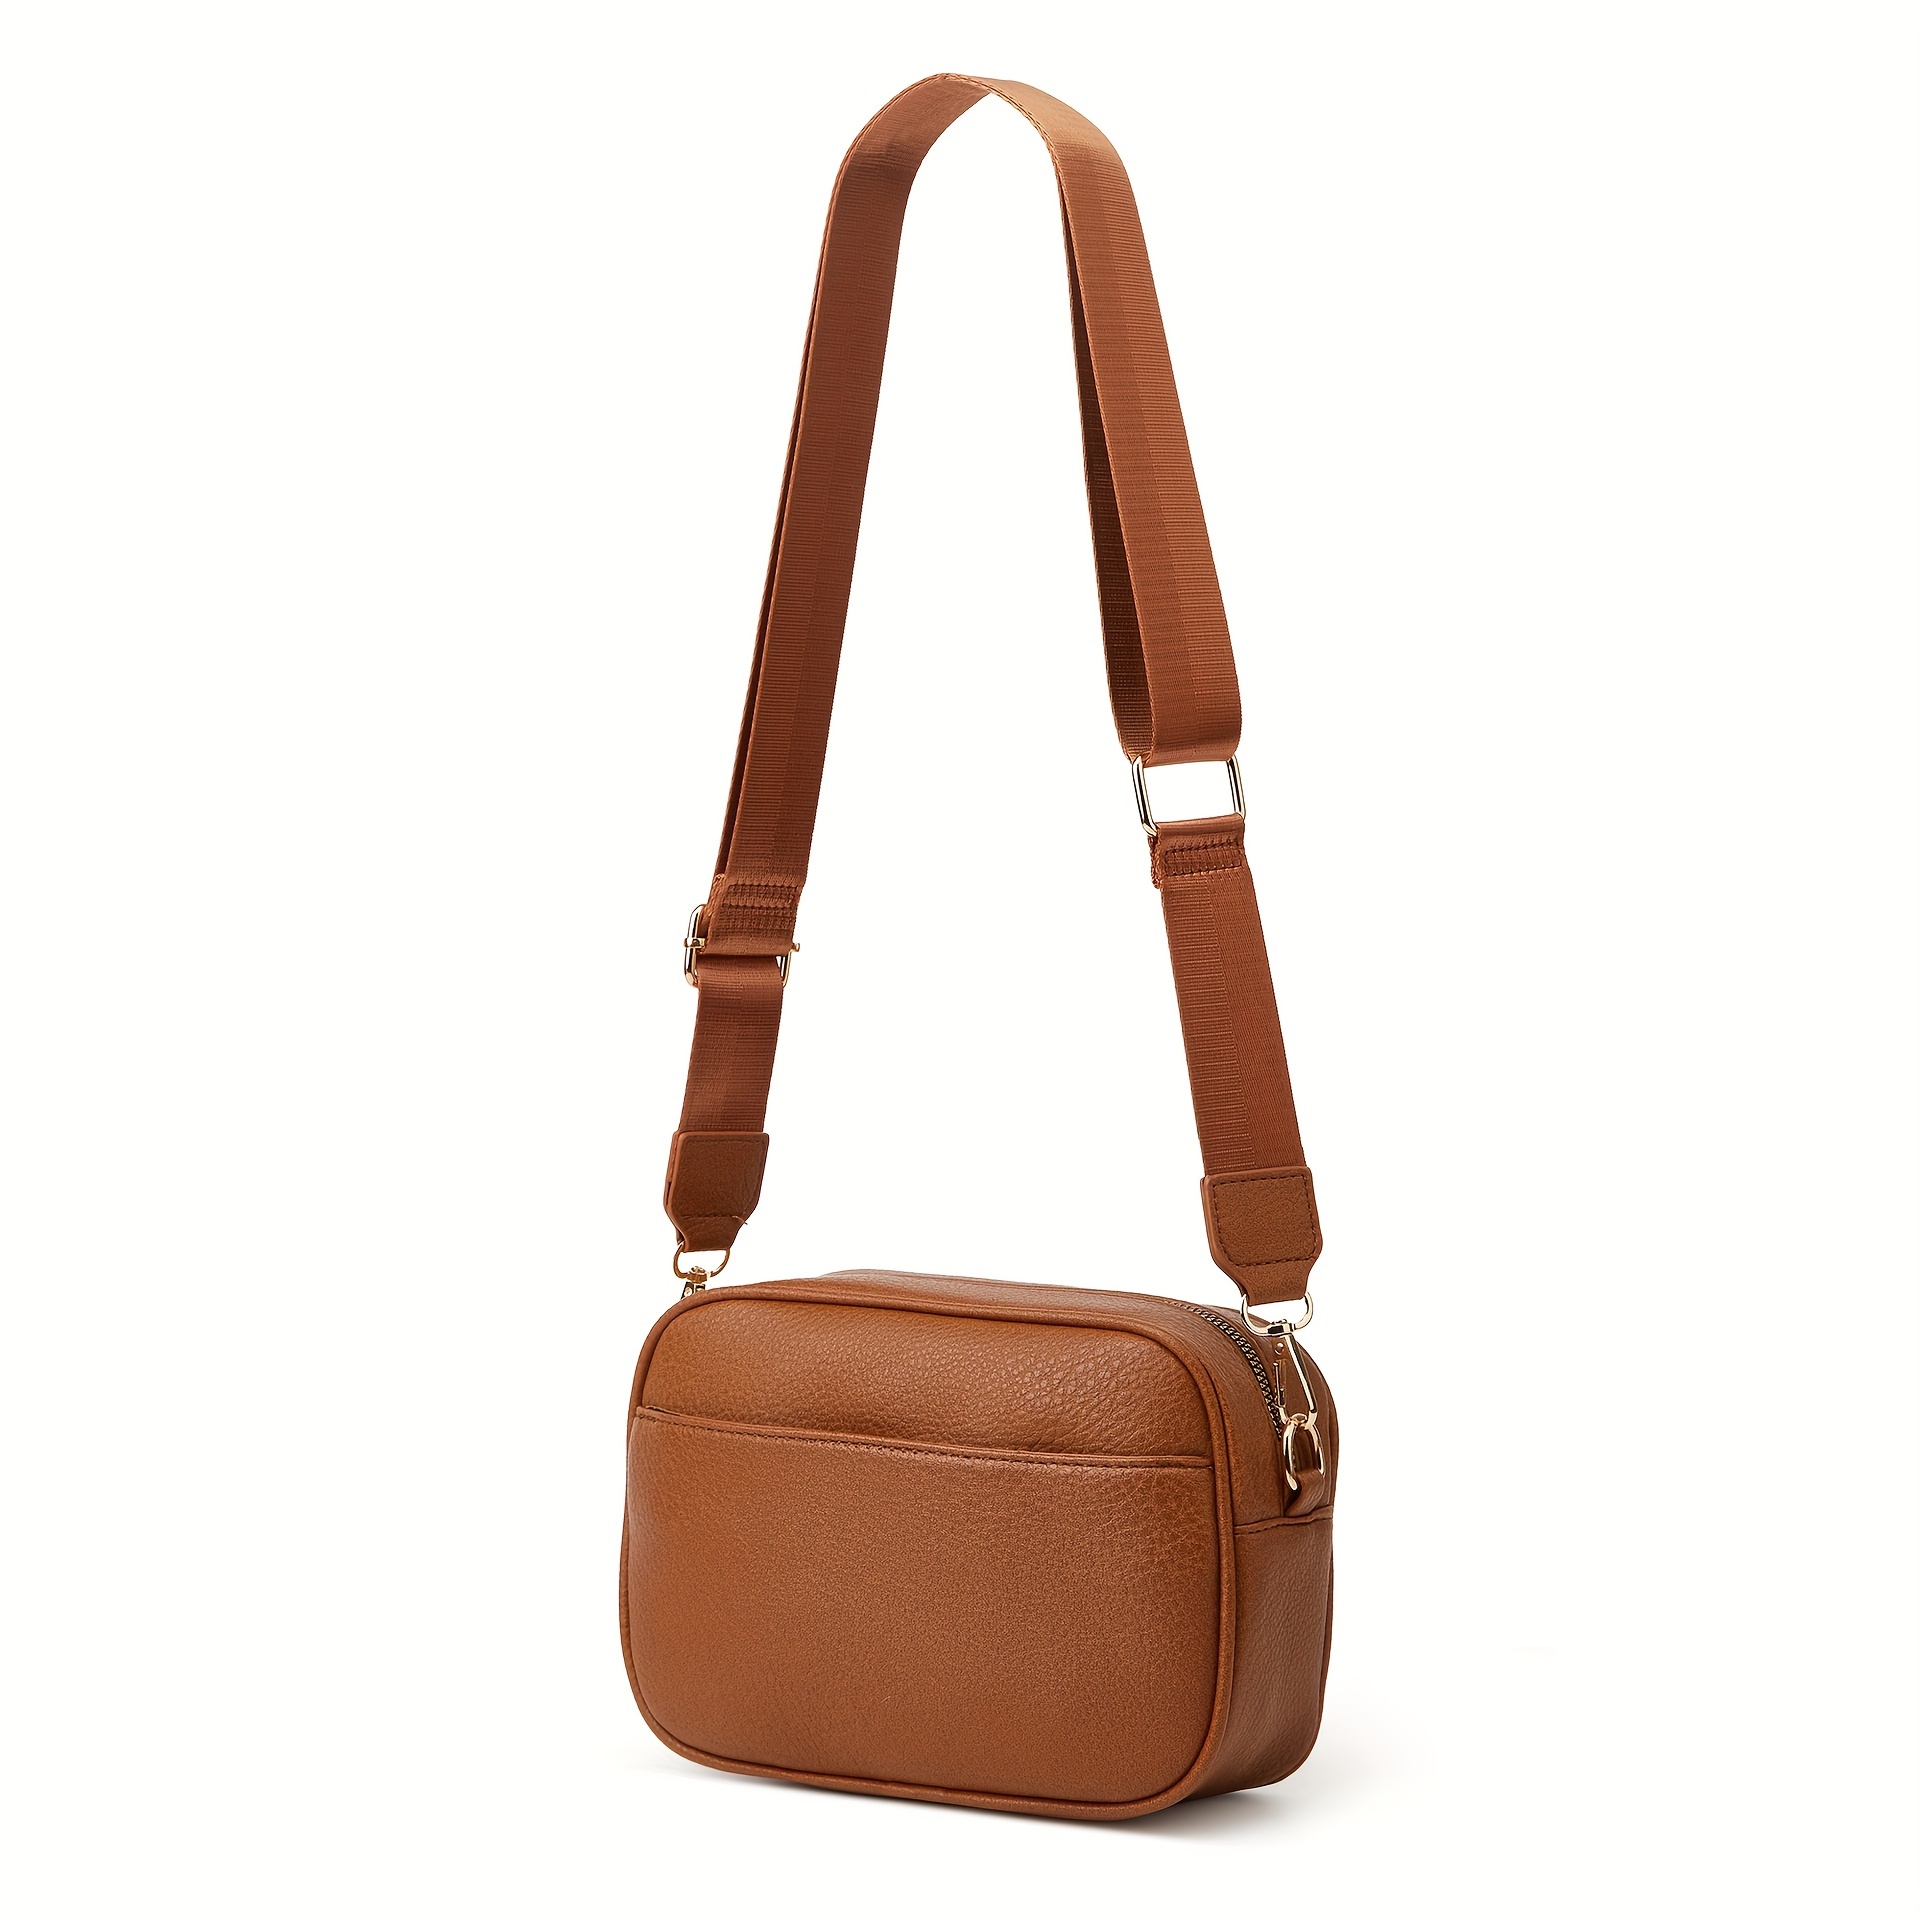 Elegant ladies signature handbags For Stylish And Trendy Looks 